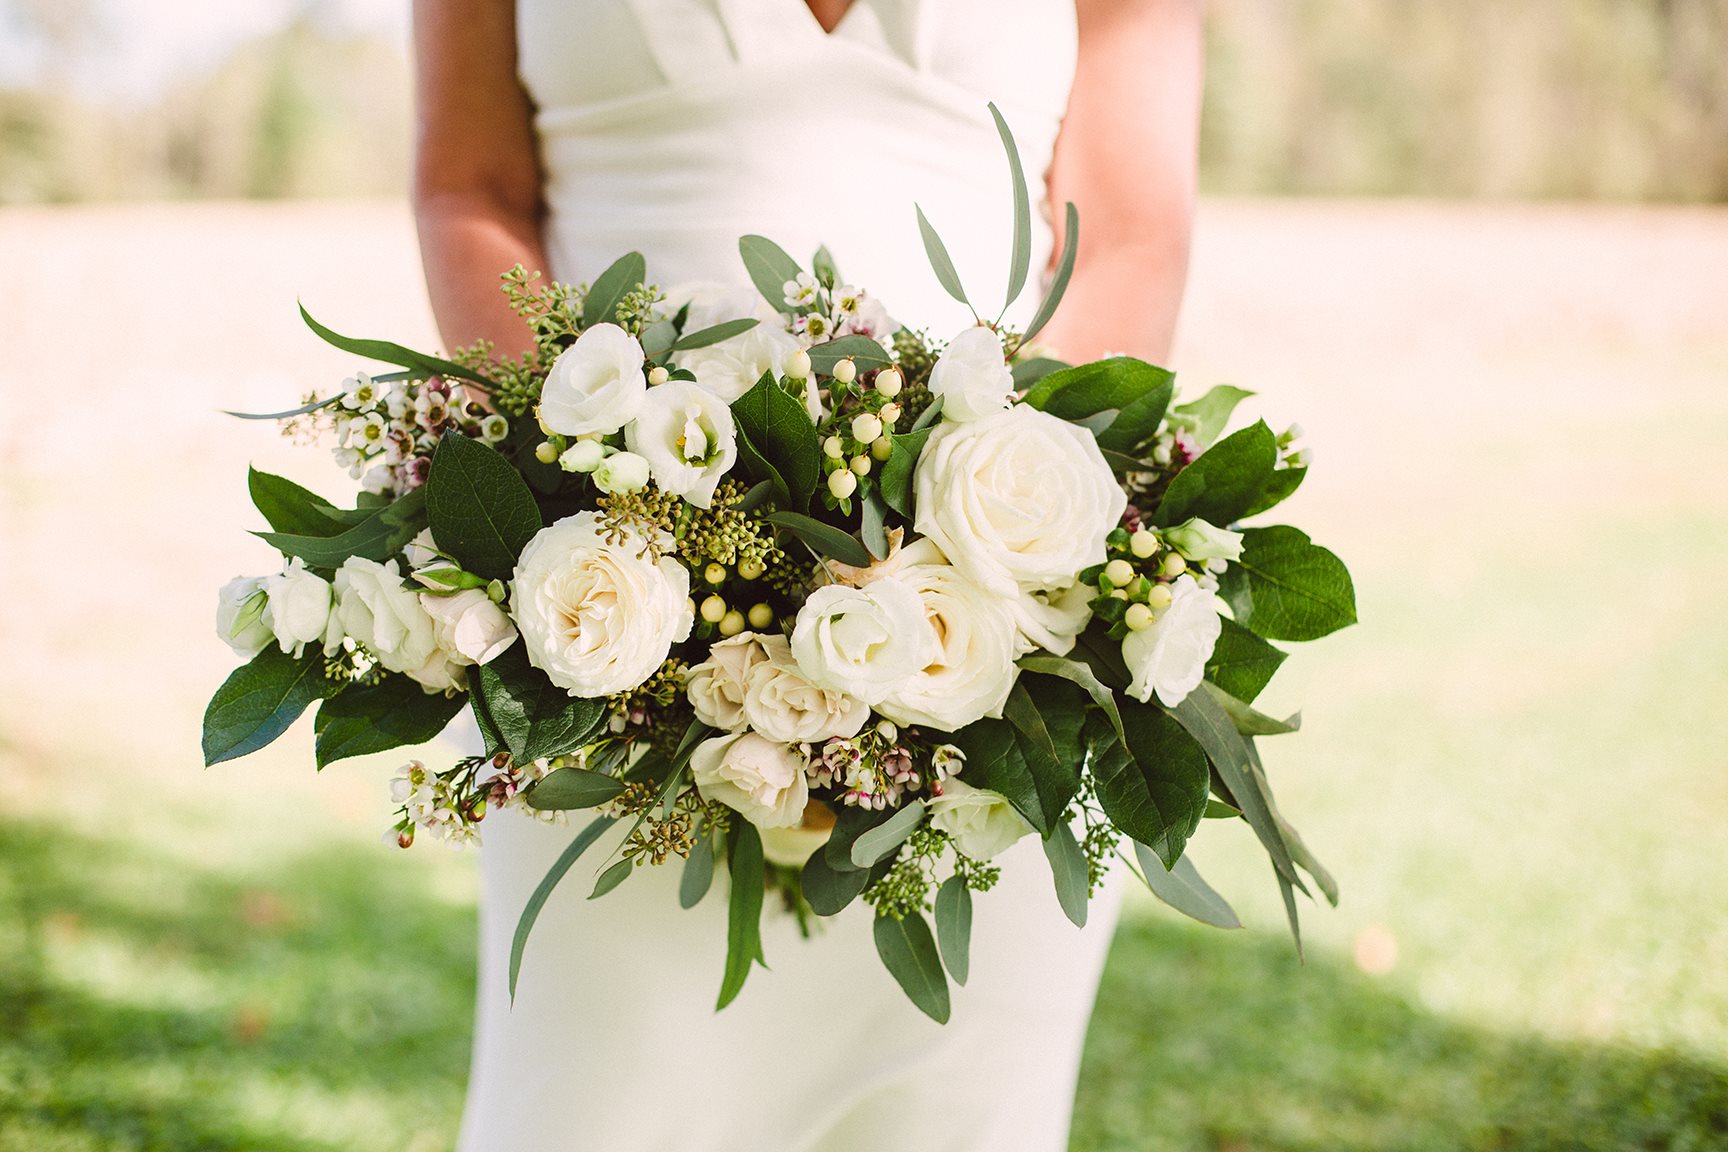  White and green bouquet - Cincinnati bride - White bridal bouquet 